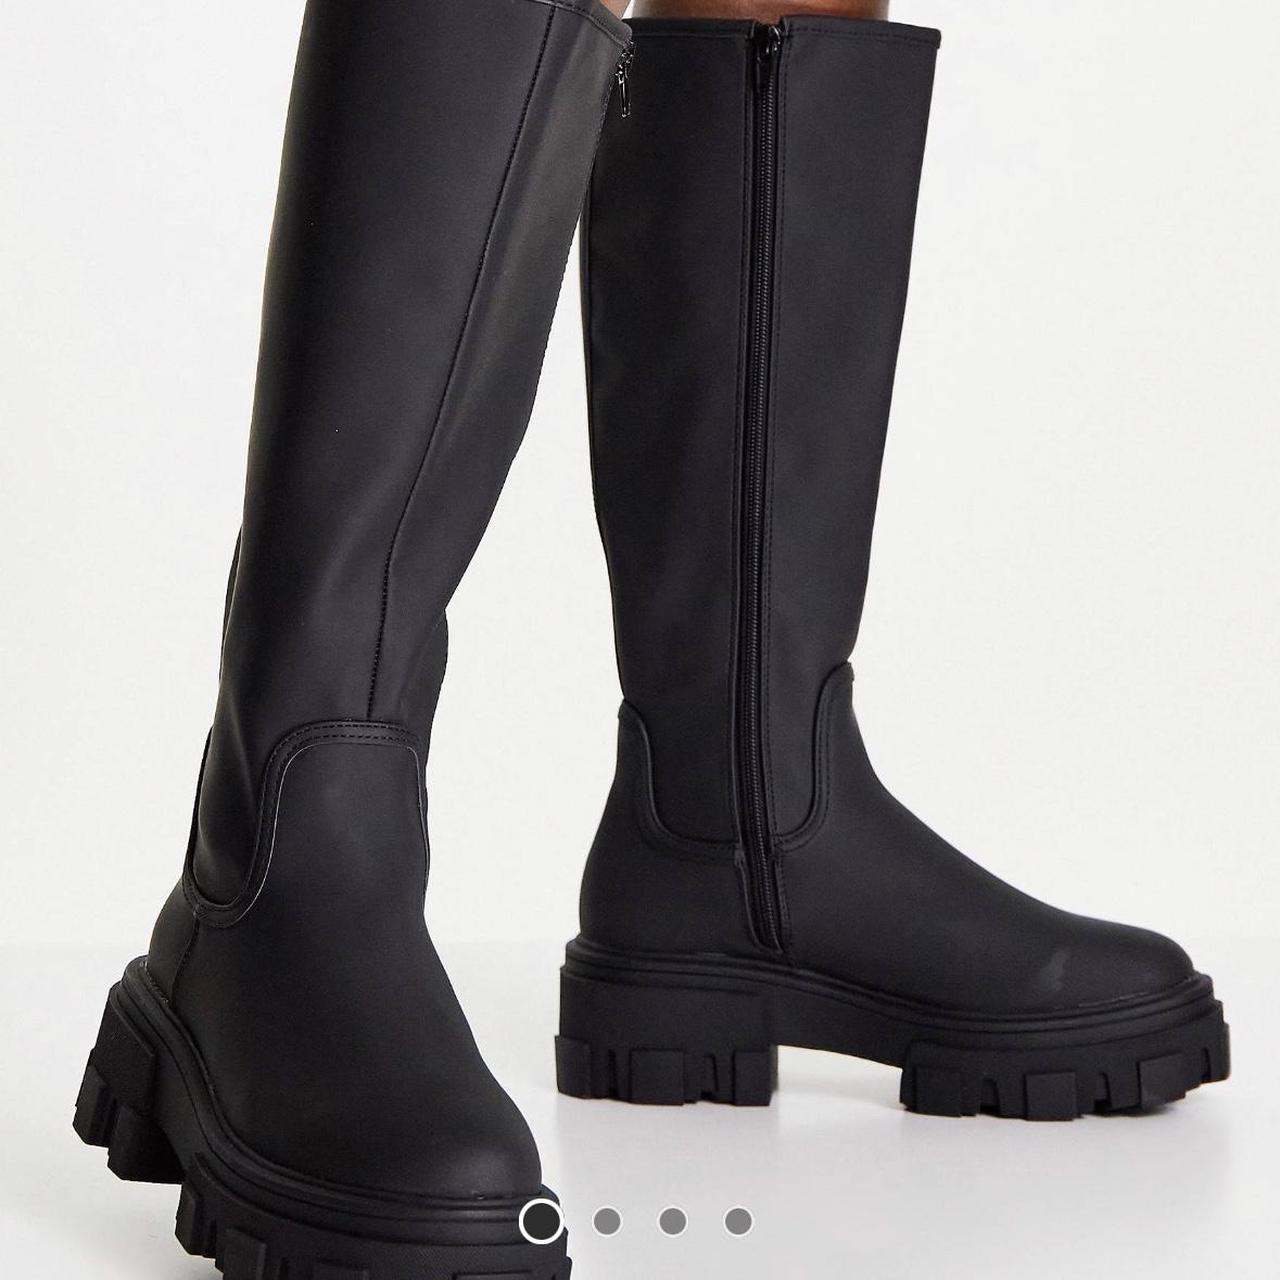 ASOS Women's Black Boots (4)